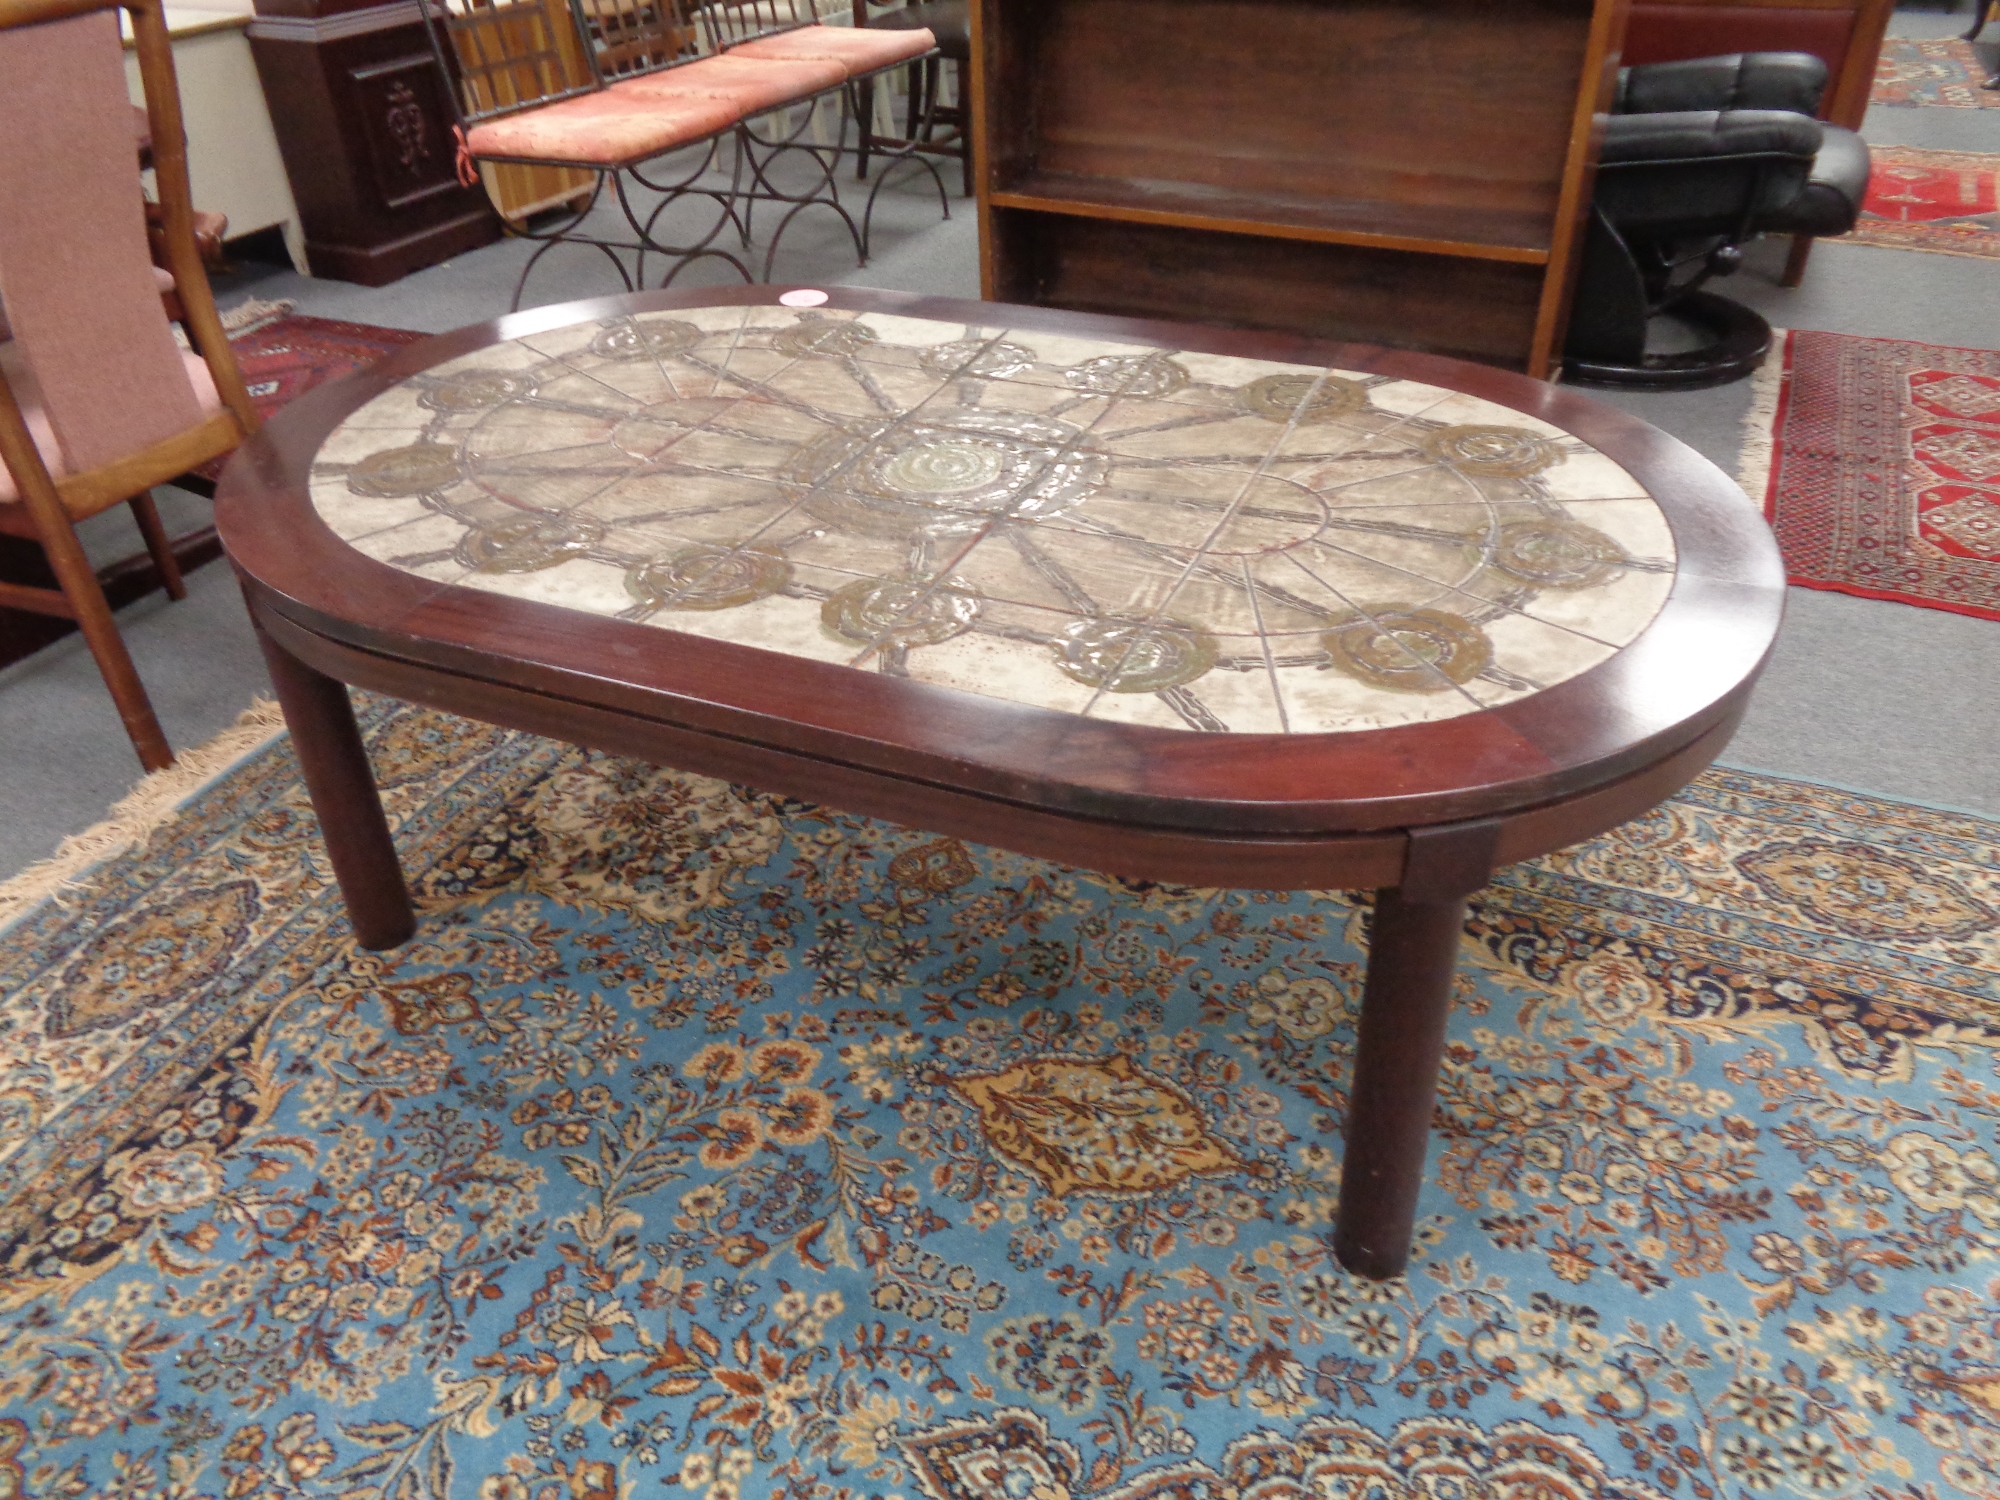 A twentieth century Danish oval tiled coffee table